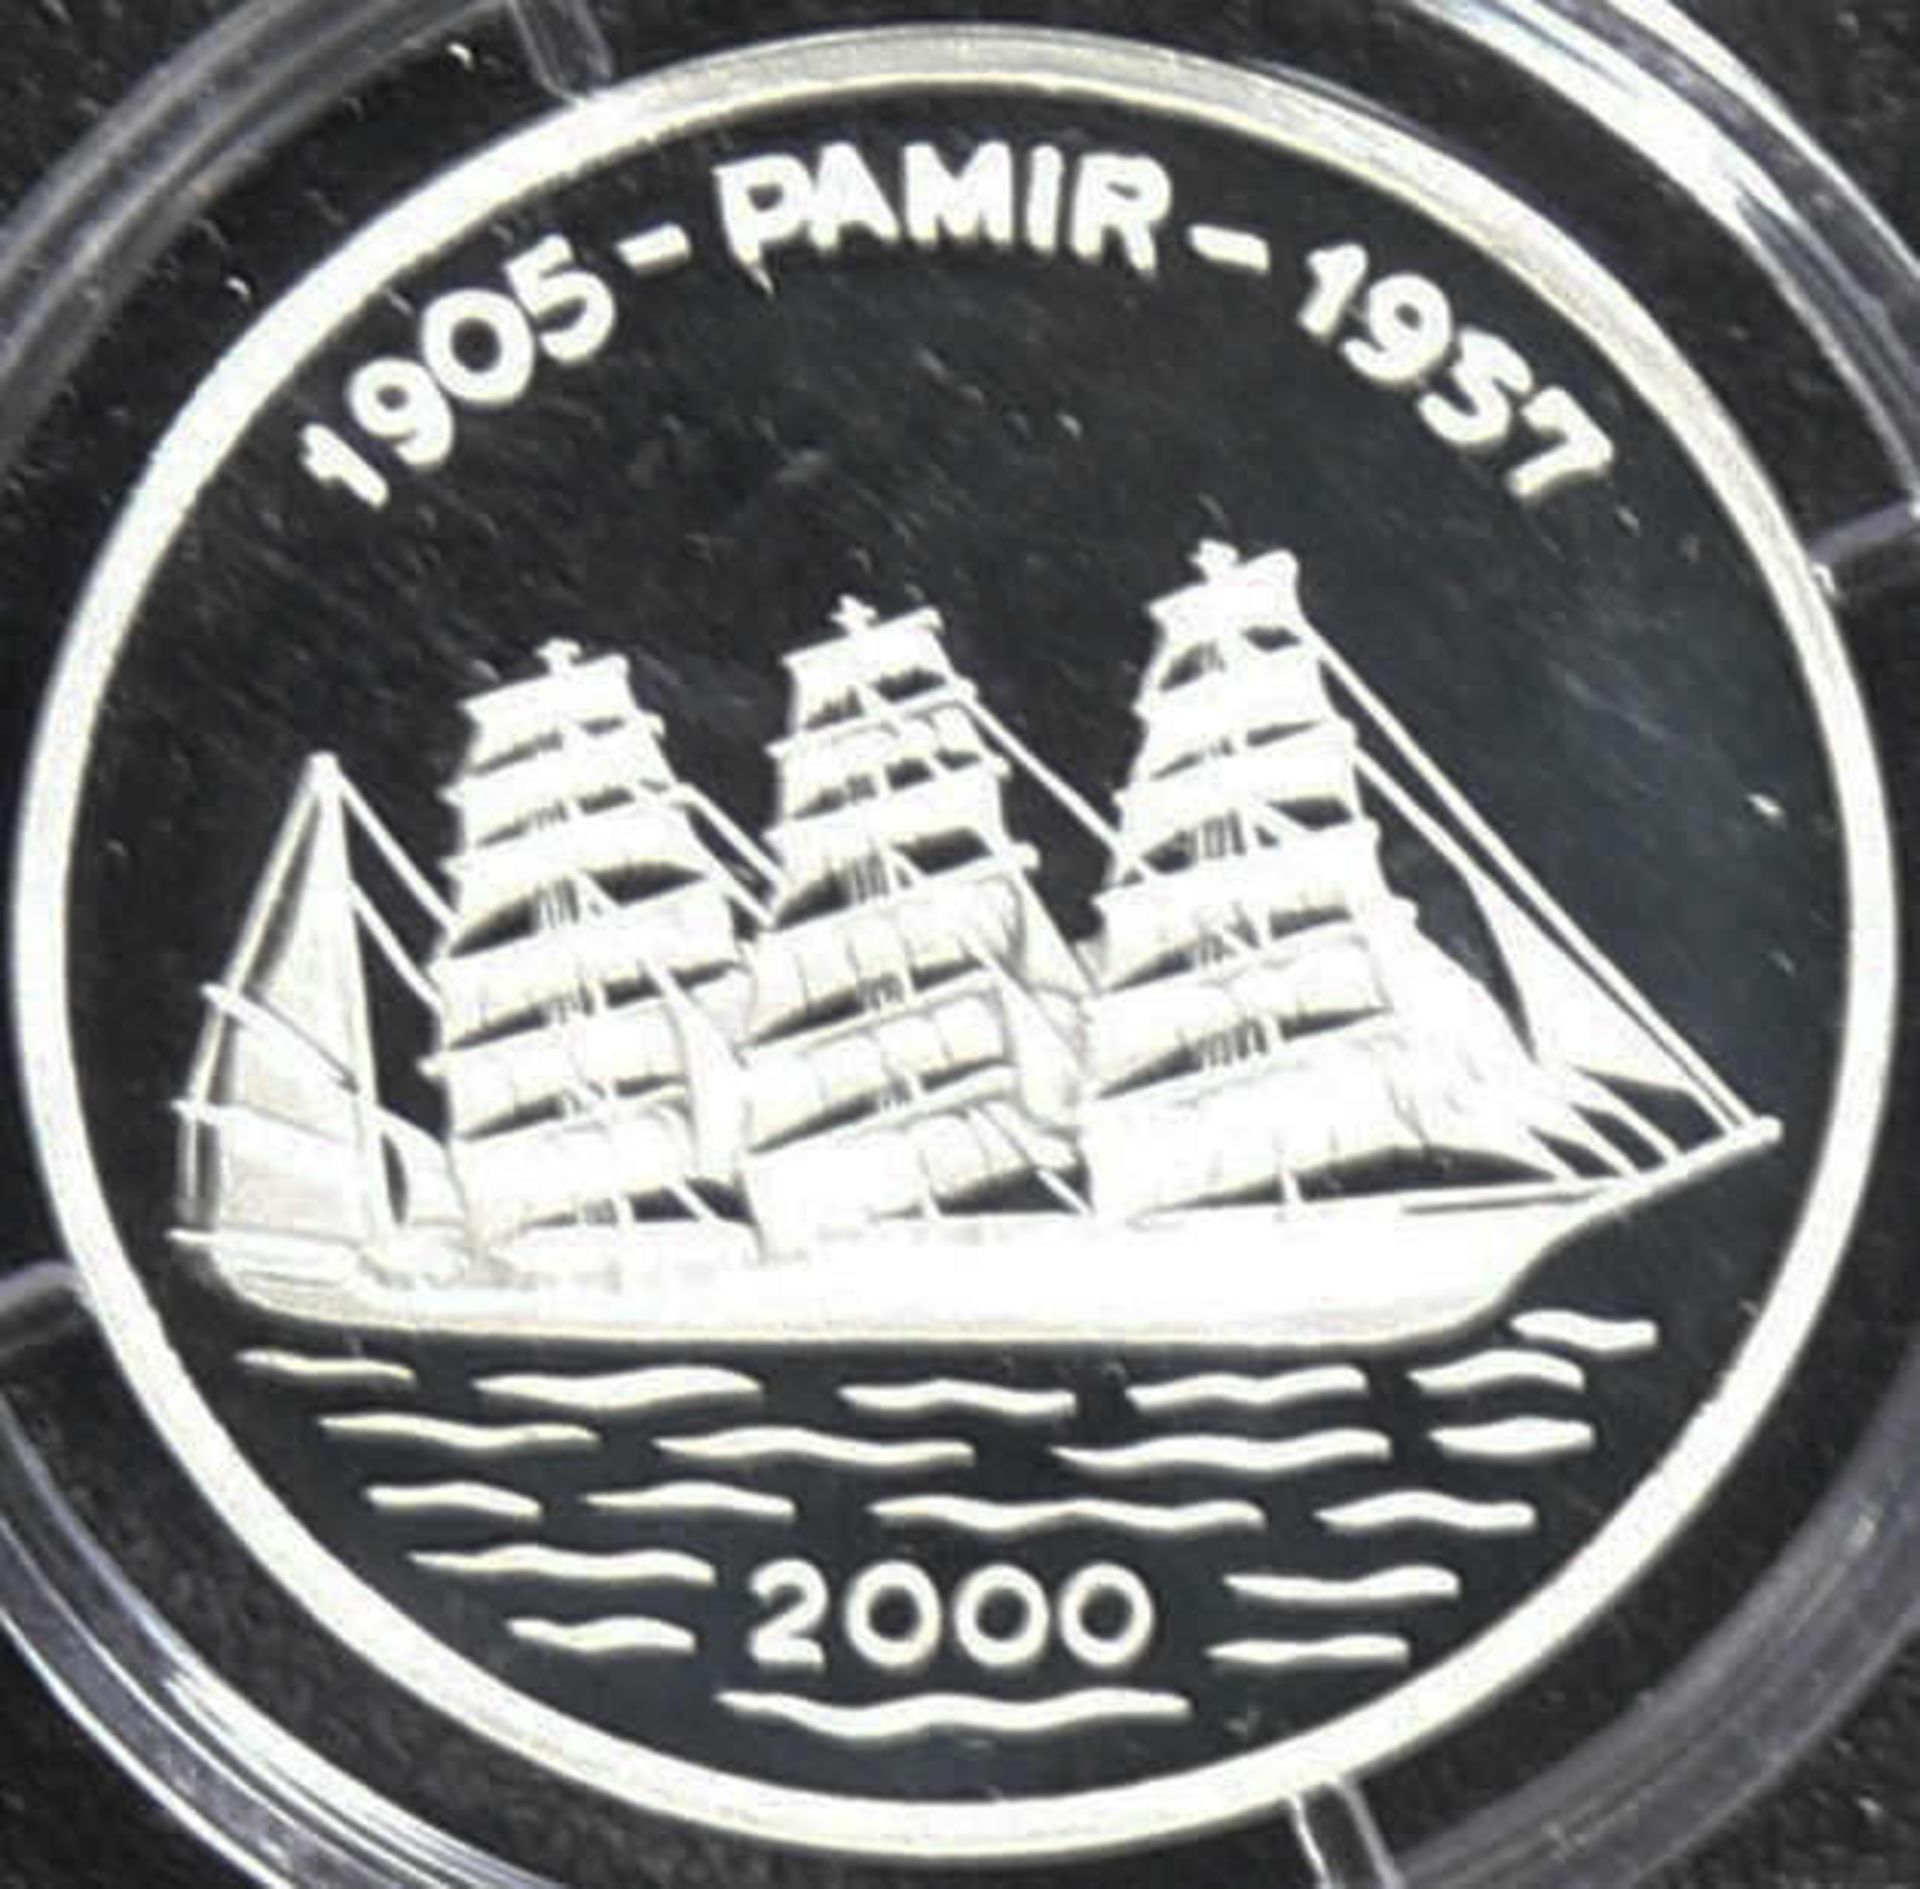 Togo 2000, 1000 Francs - Silbermünze "Pamir". Silber 999, Gewicht: ca. 15 g, Durchmesser: ca. 35 mm.